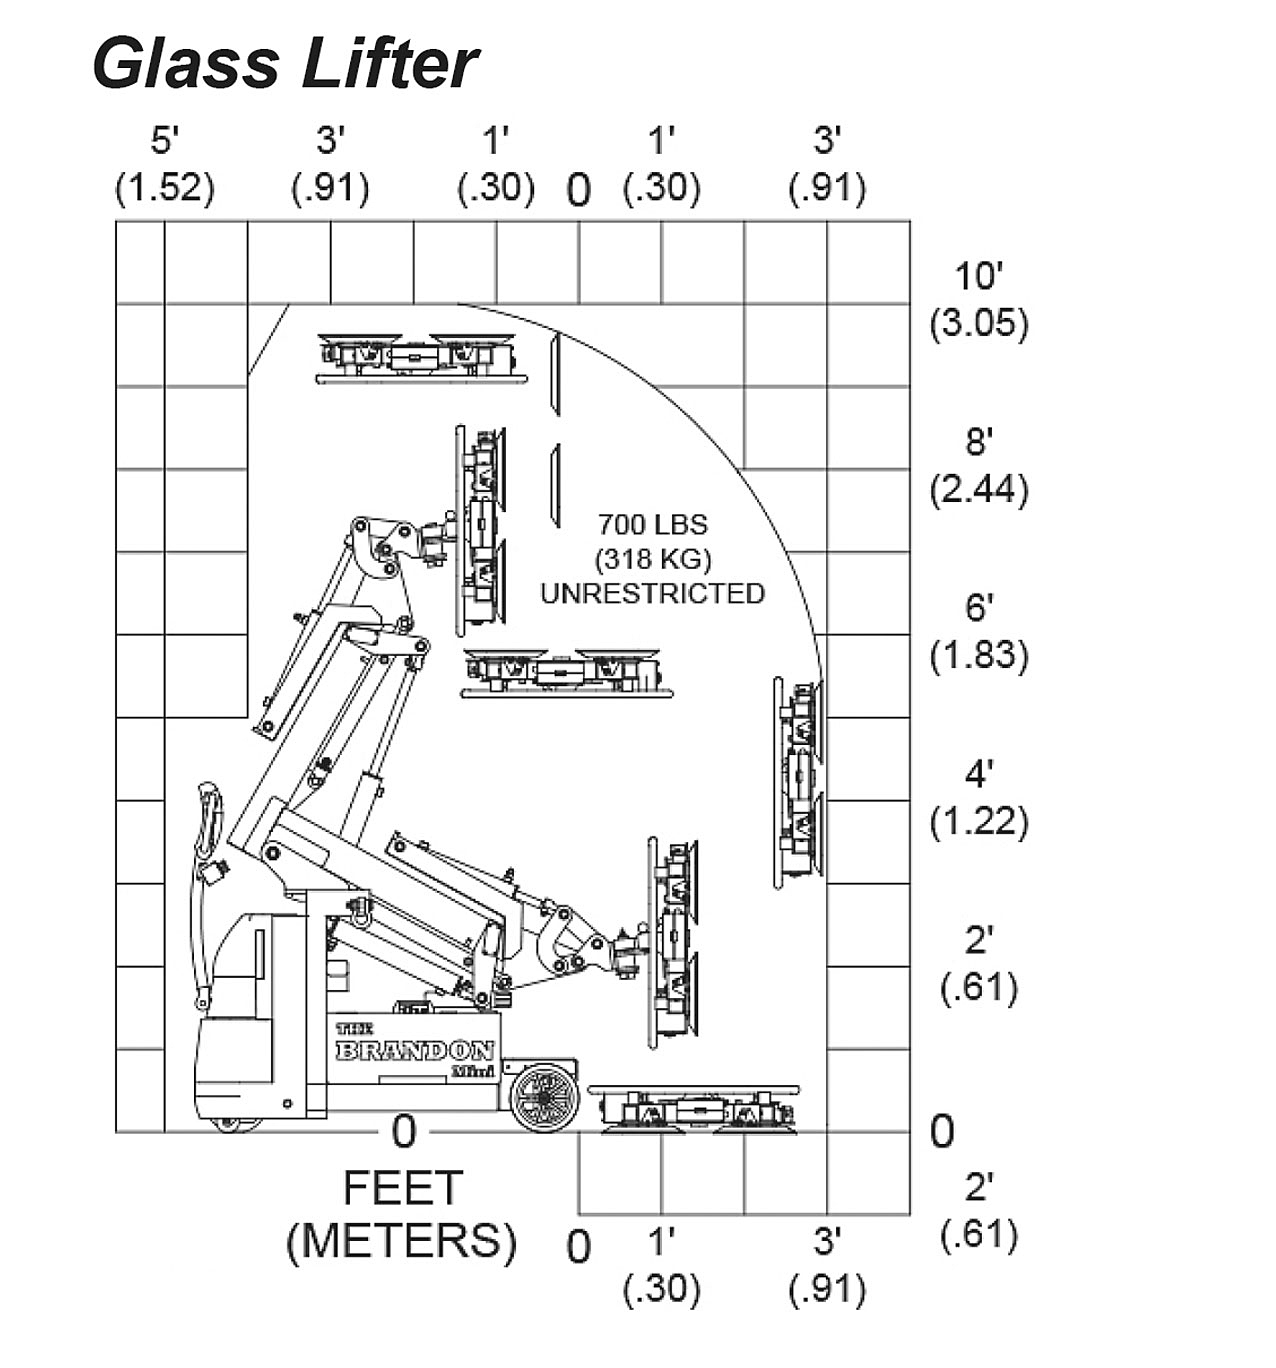 The Brandon Mini Glass Lifter Load Capacity